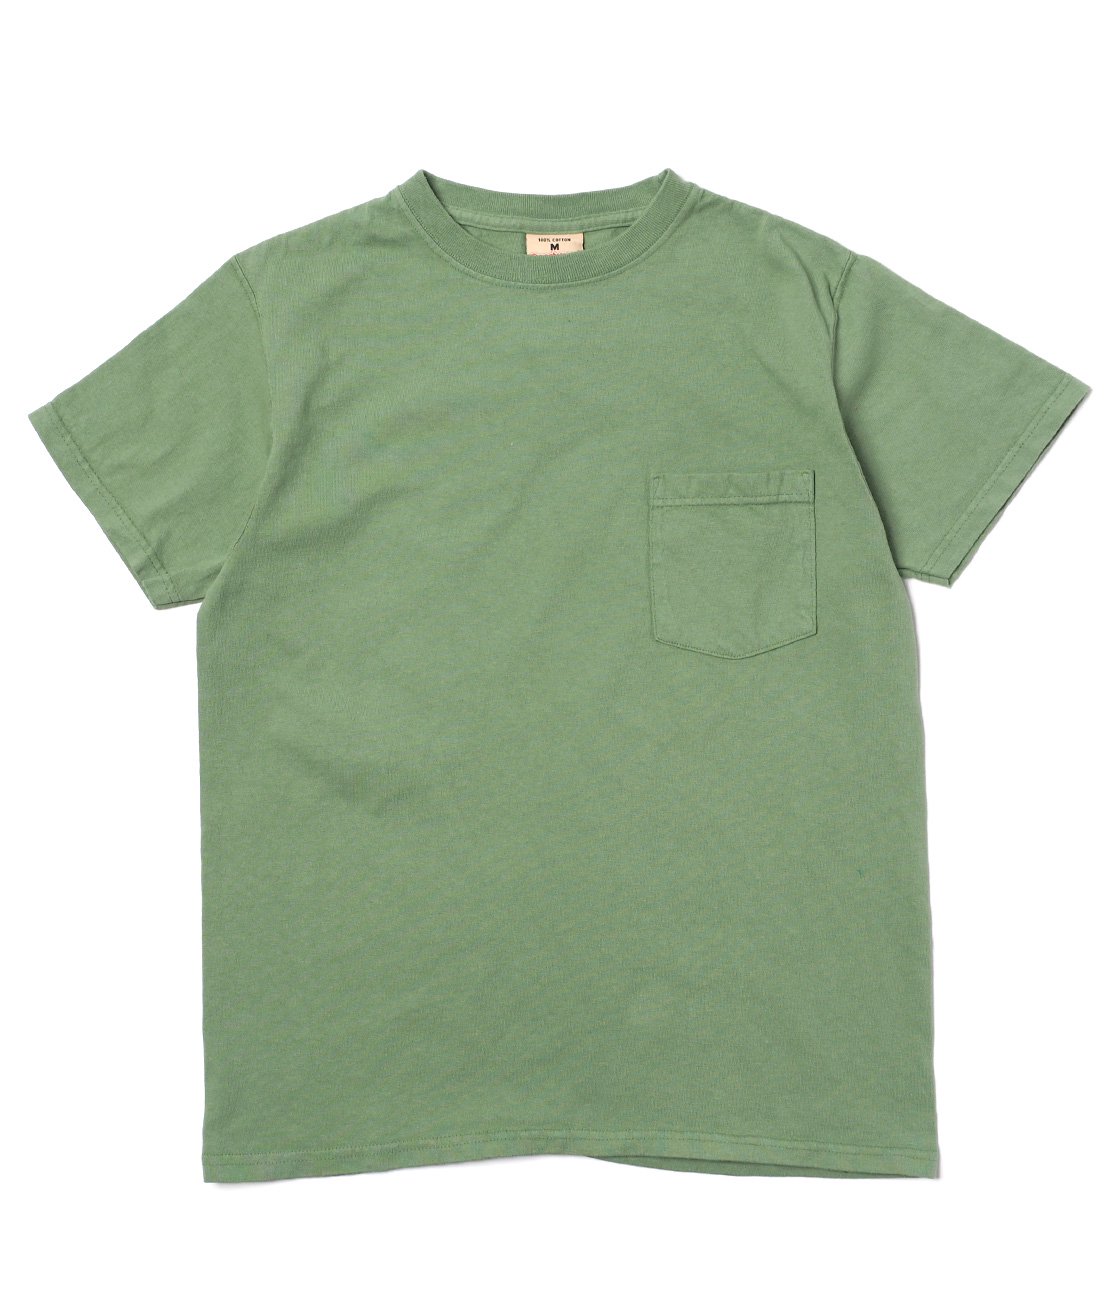 GOODWEAR】CREW NECK POCKET TEE - USED GREEN 7.2オンス Tシャツ USA 